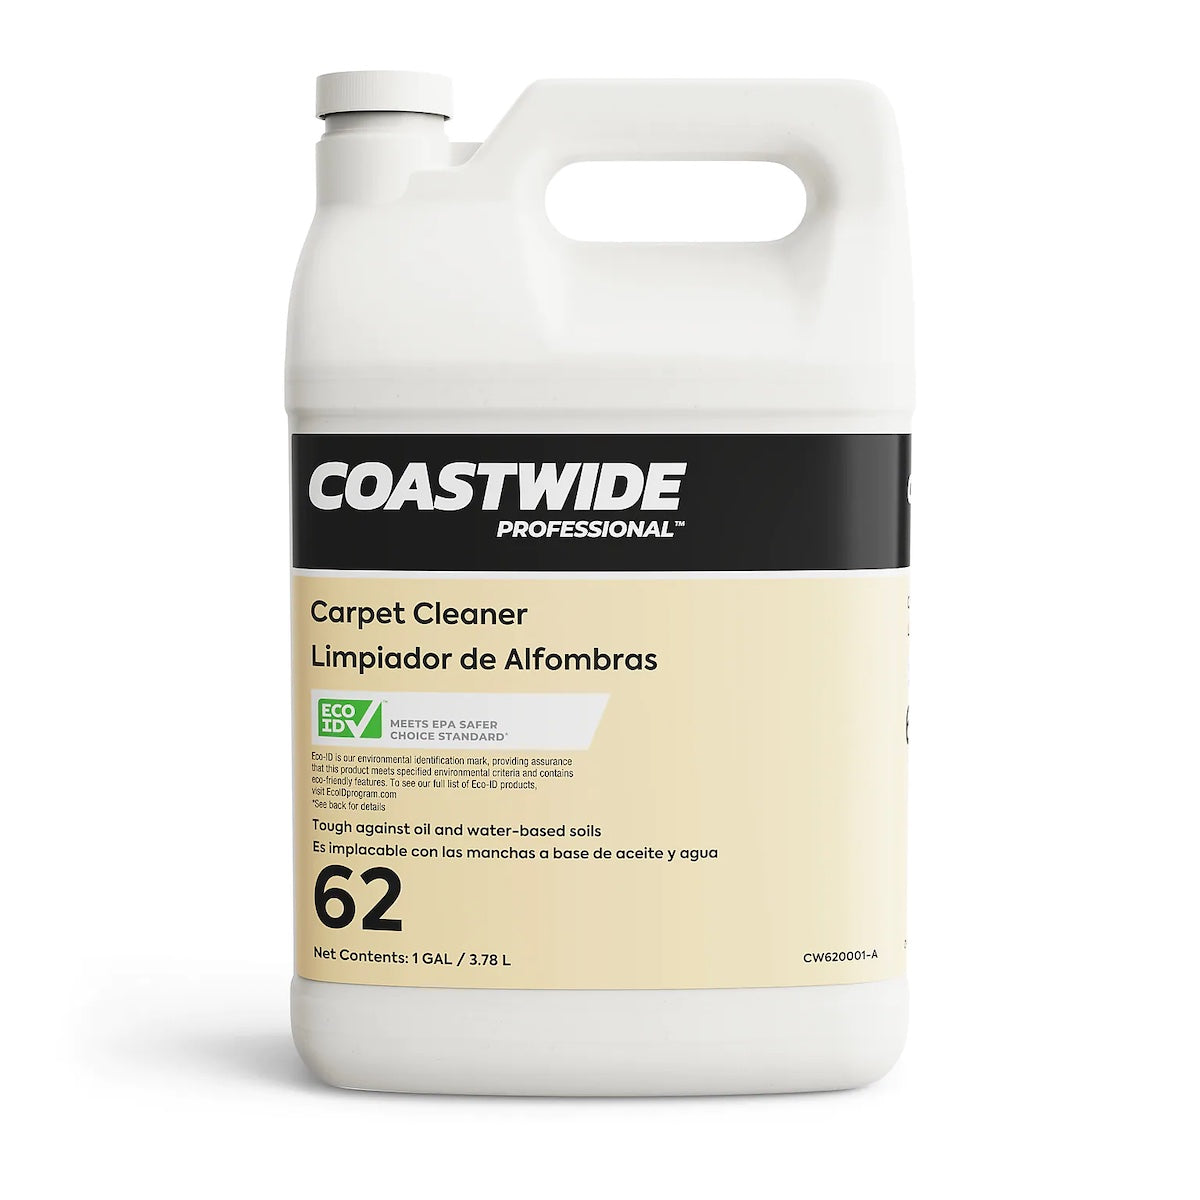 Coastwide Professional™ Carpet Cleaner 62, 3.78L